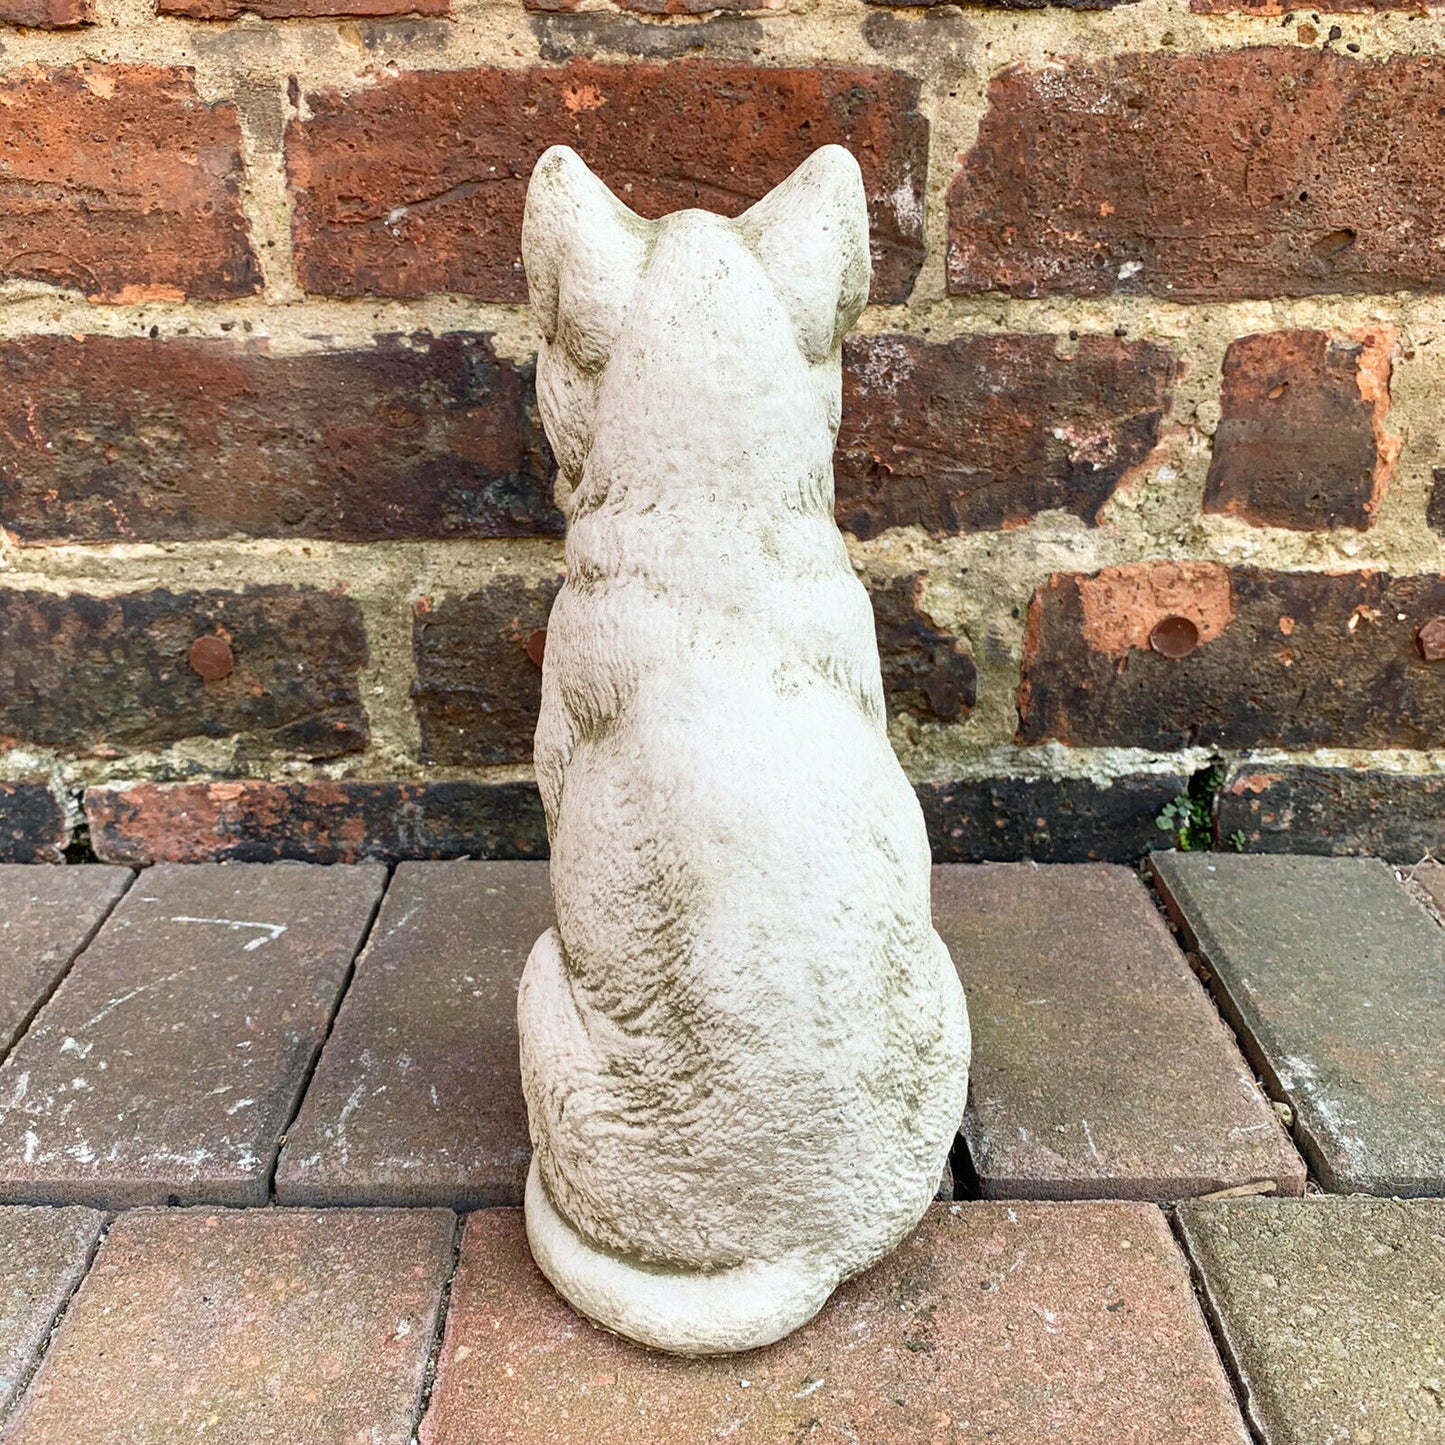 Stone Serene Cat Garden Sculpture 4kg